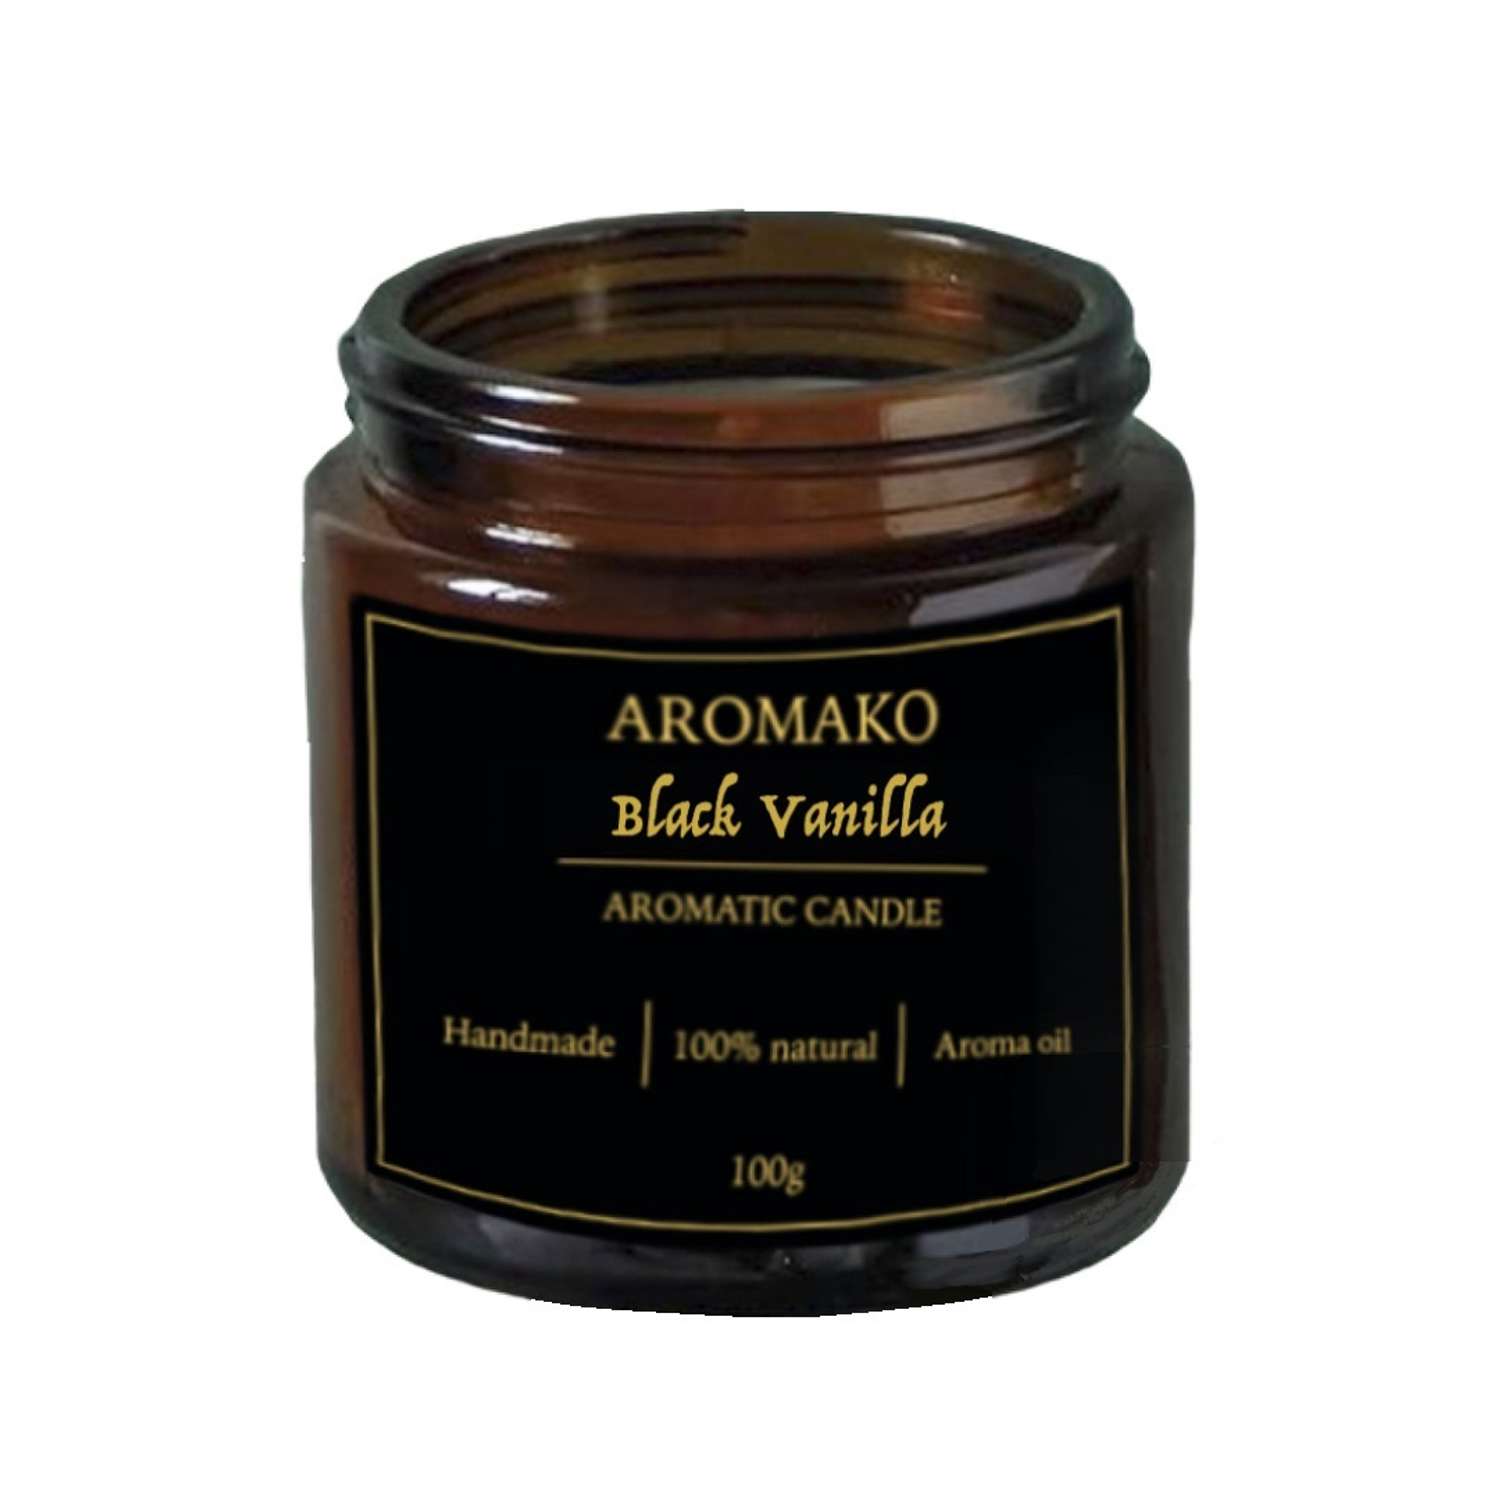 Ароматическая свеча AromaKo Black Vanilla 100 гр - фото 1